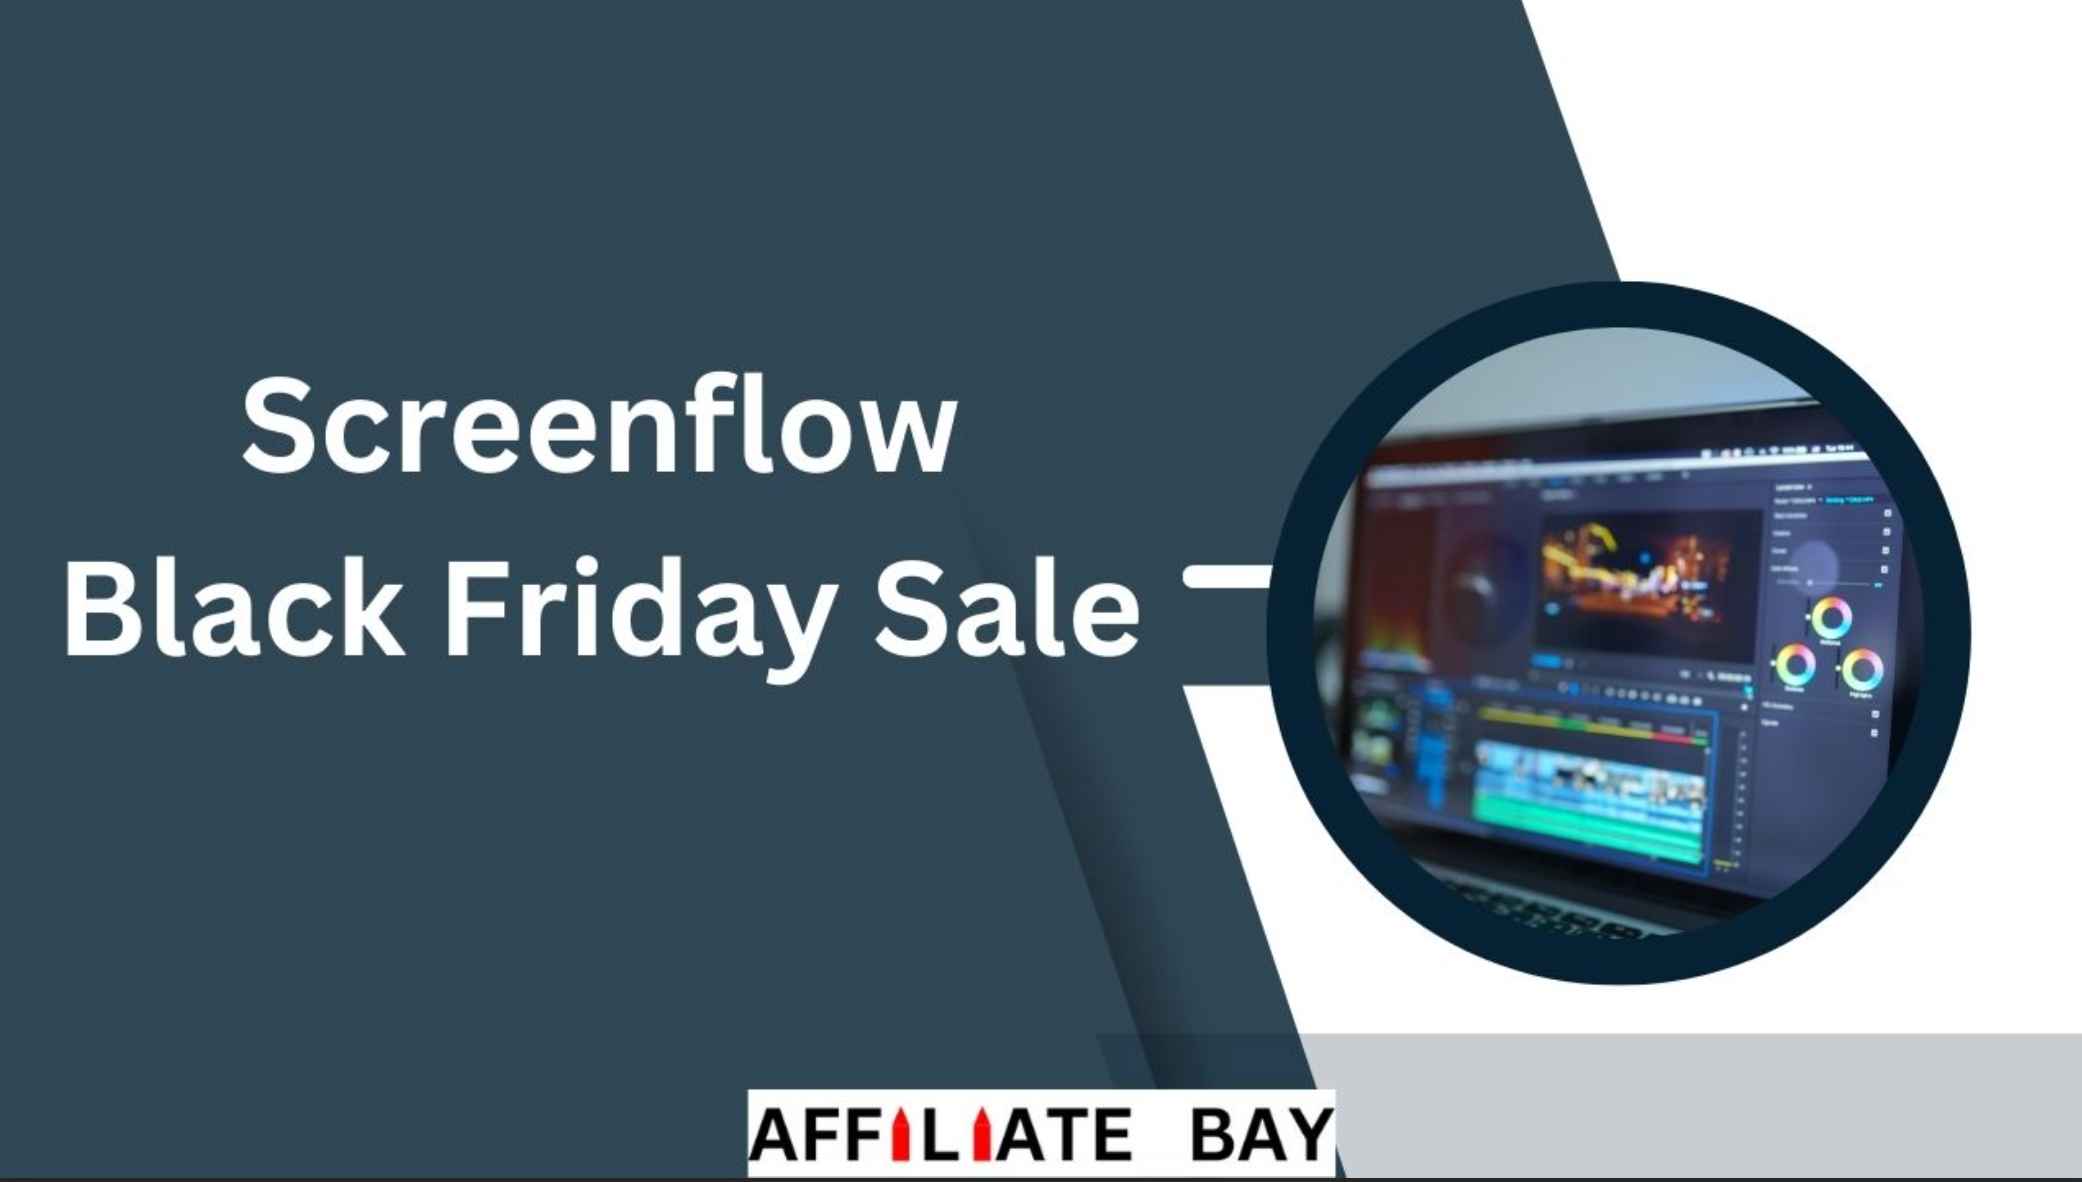 Screenflow Black Friday Sale